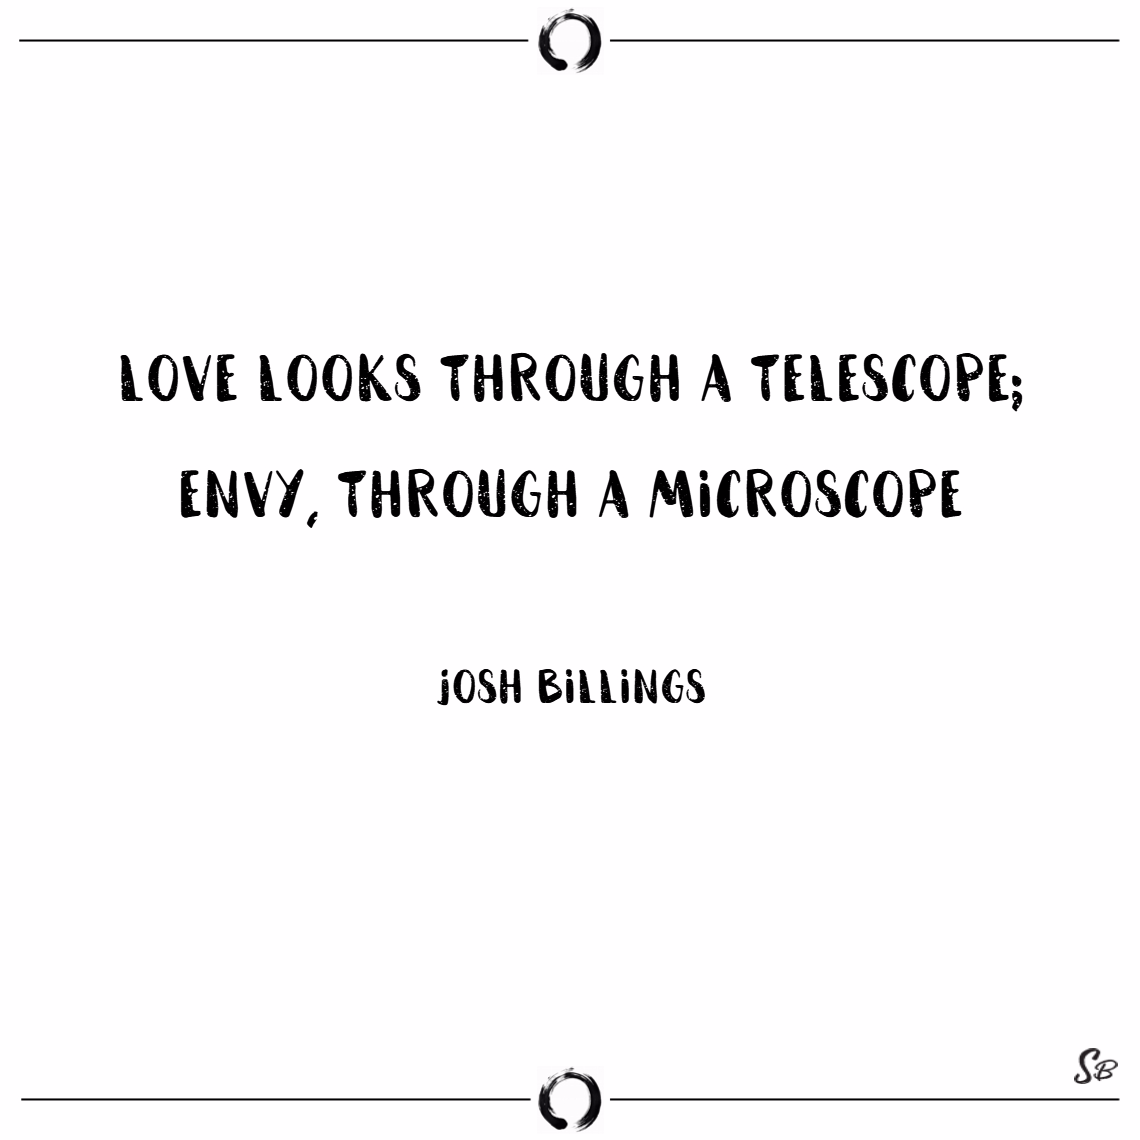 Love looks through a telescope; envy, through a microscope. – josh billings